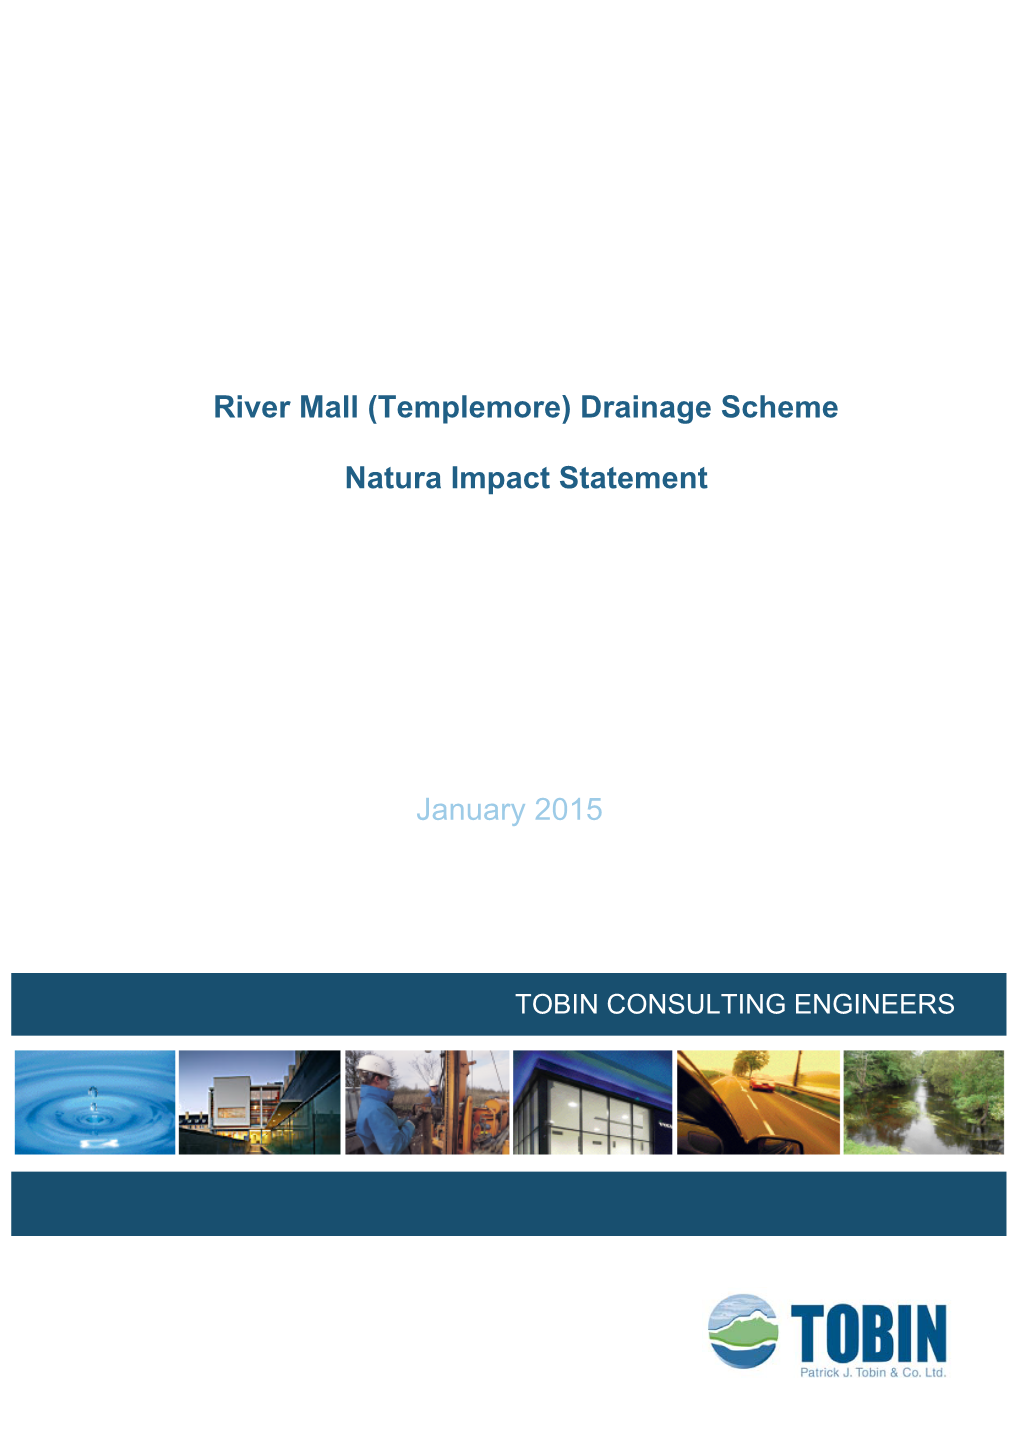 River Mall (Templemore) Drainage Scheme Natura Impact Statement